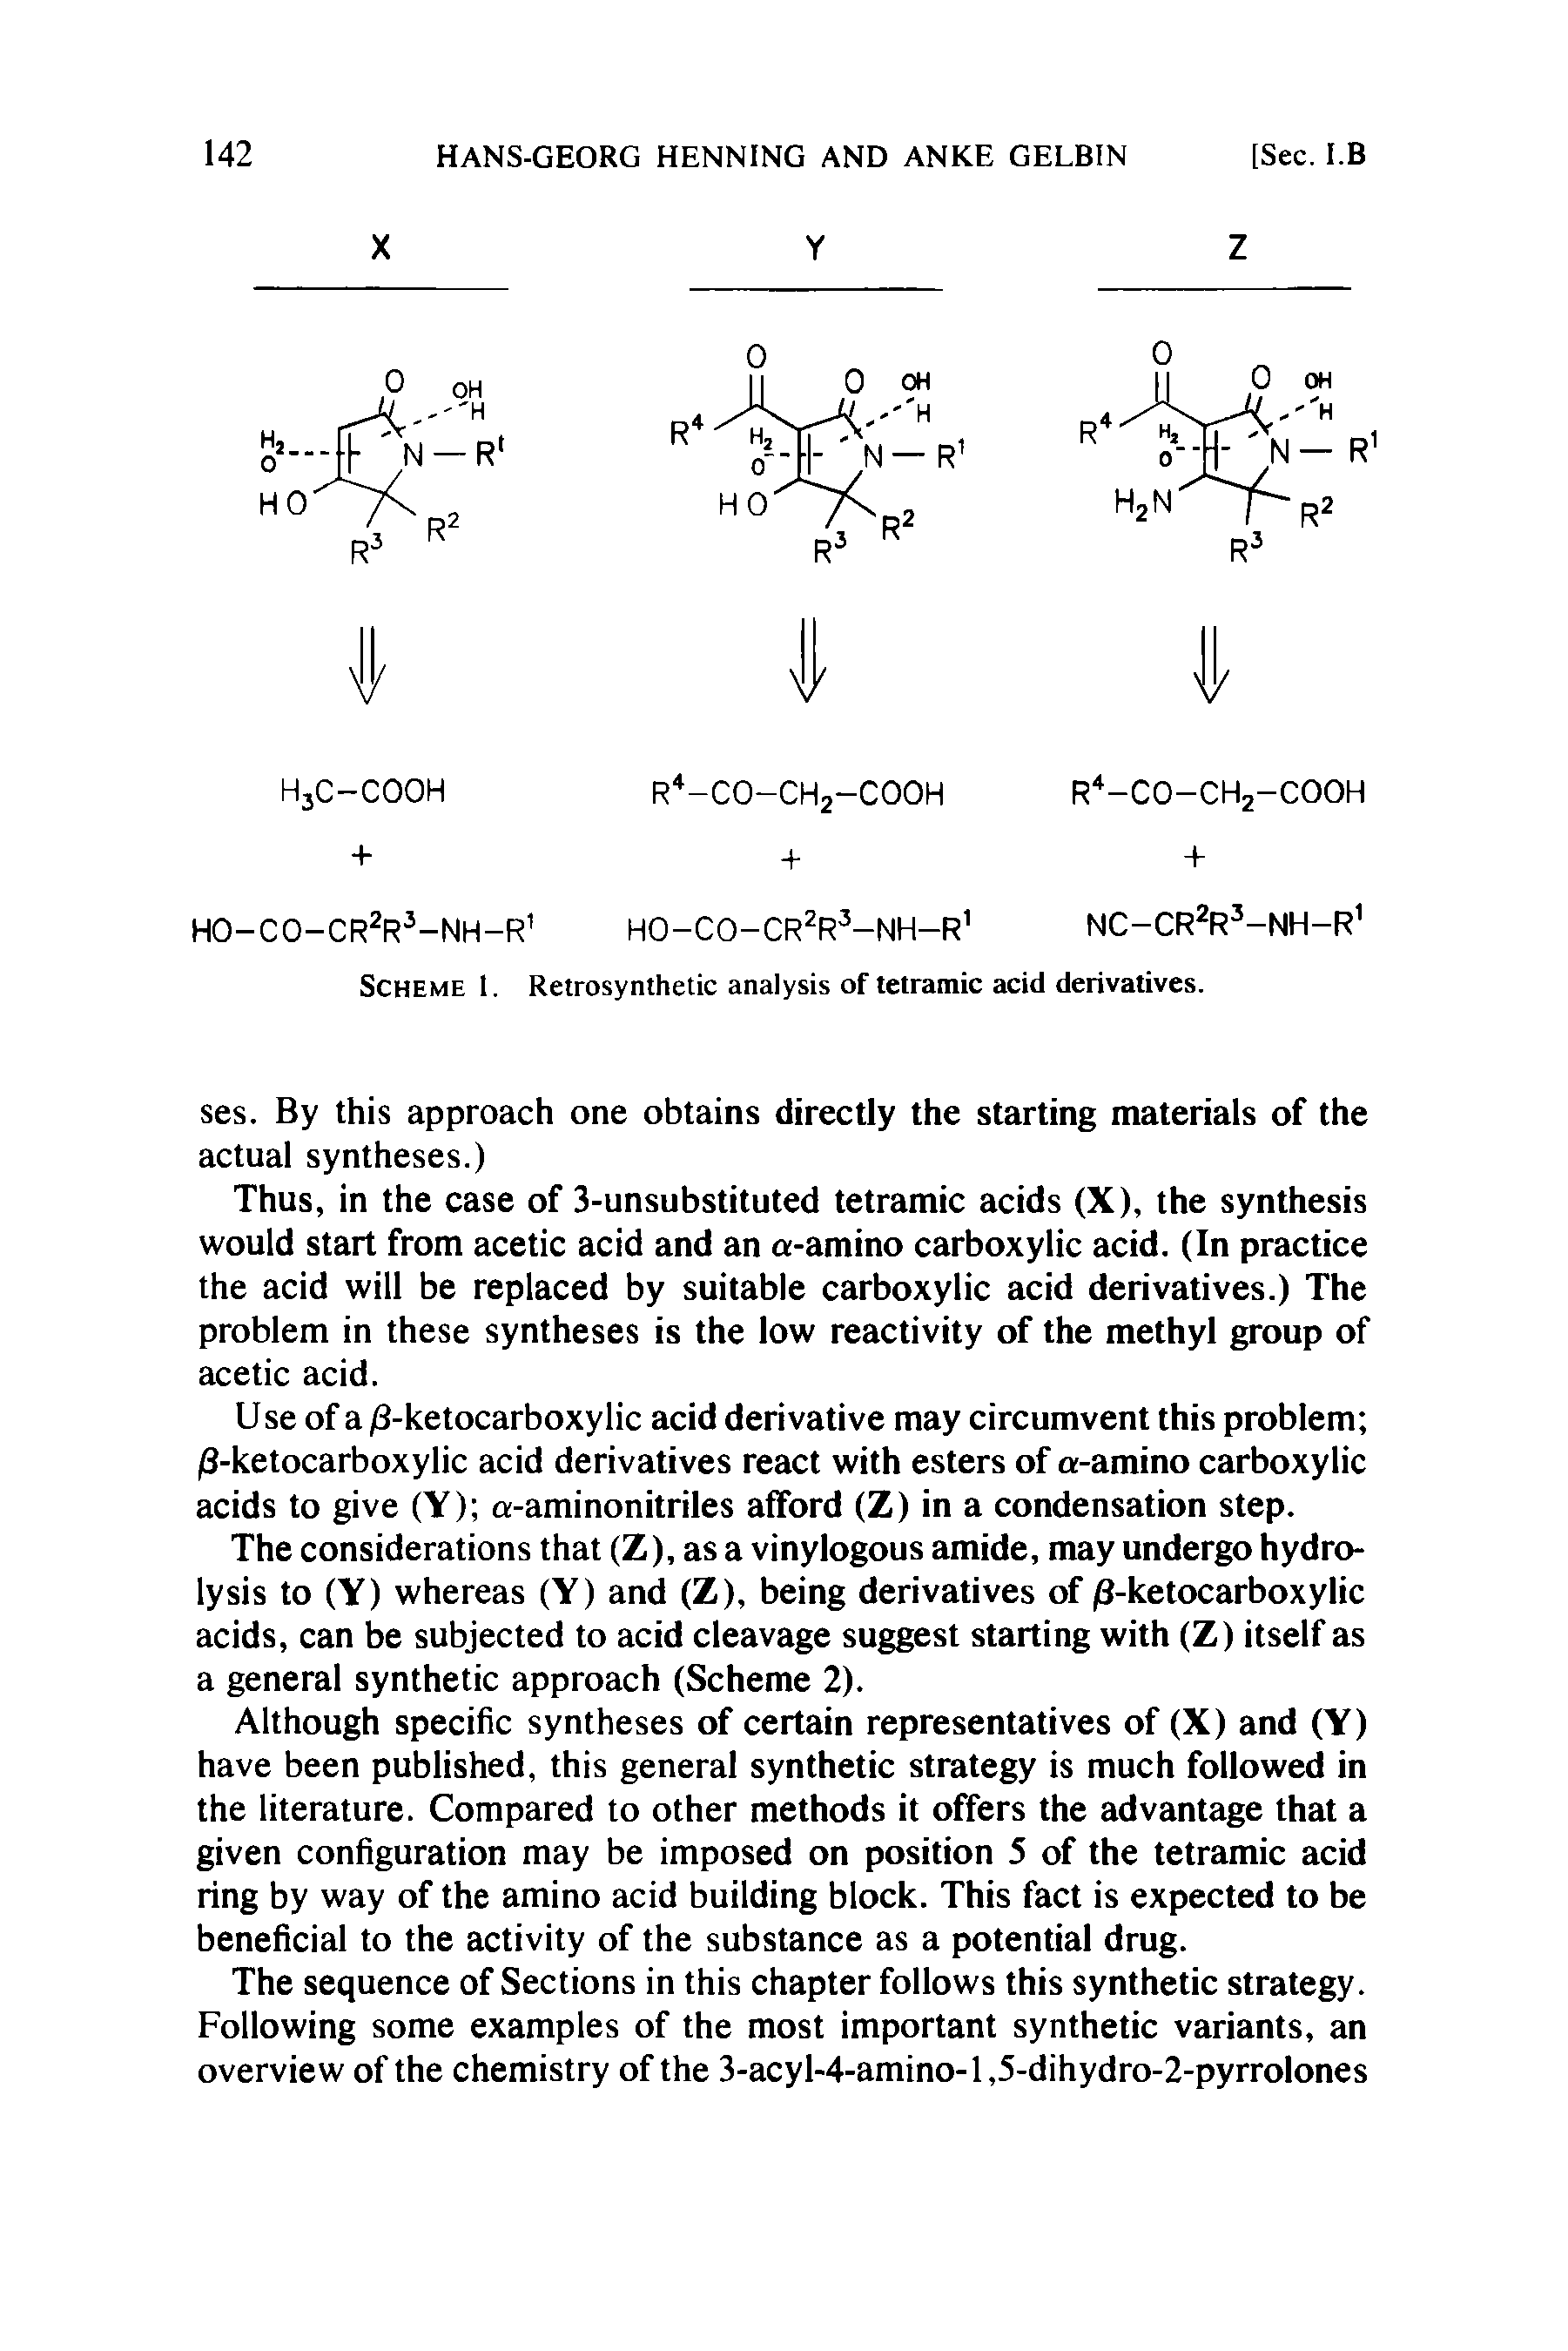 Scheme 1. Retrosynthetic analysis of tetramic acid derivatives.